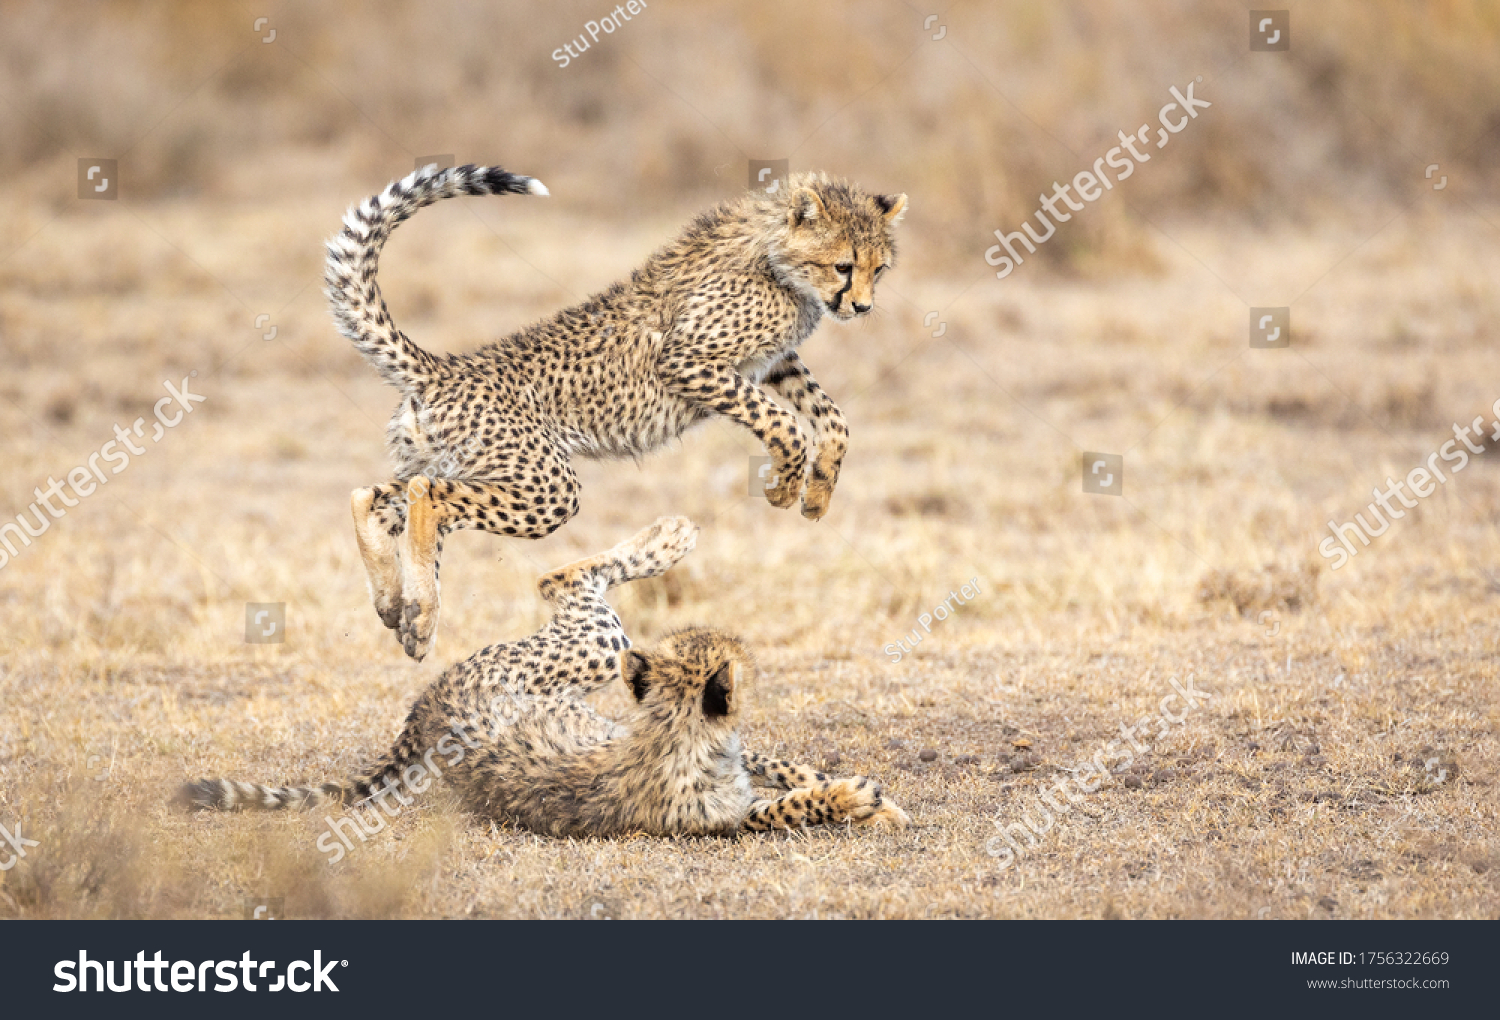 Two young Cheetah cubs playing  in dry grassy area in Ndutu Tanzania #1756322669